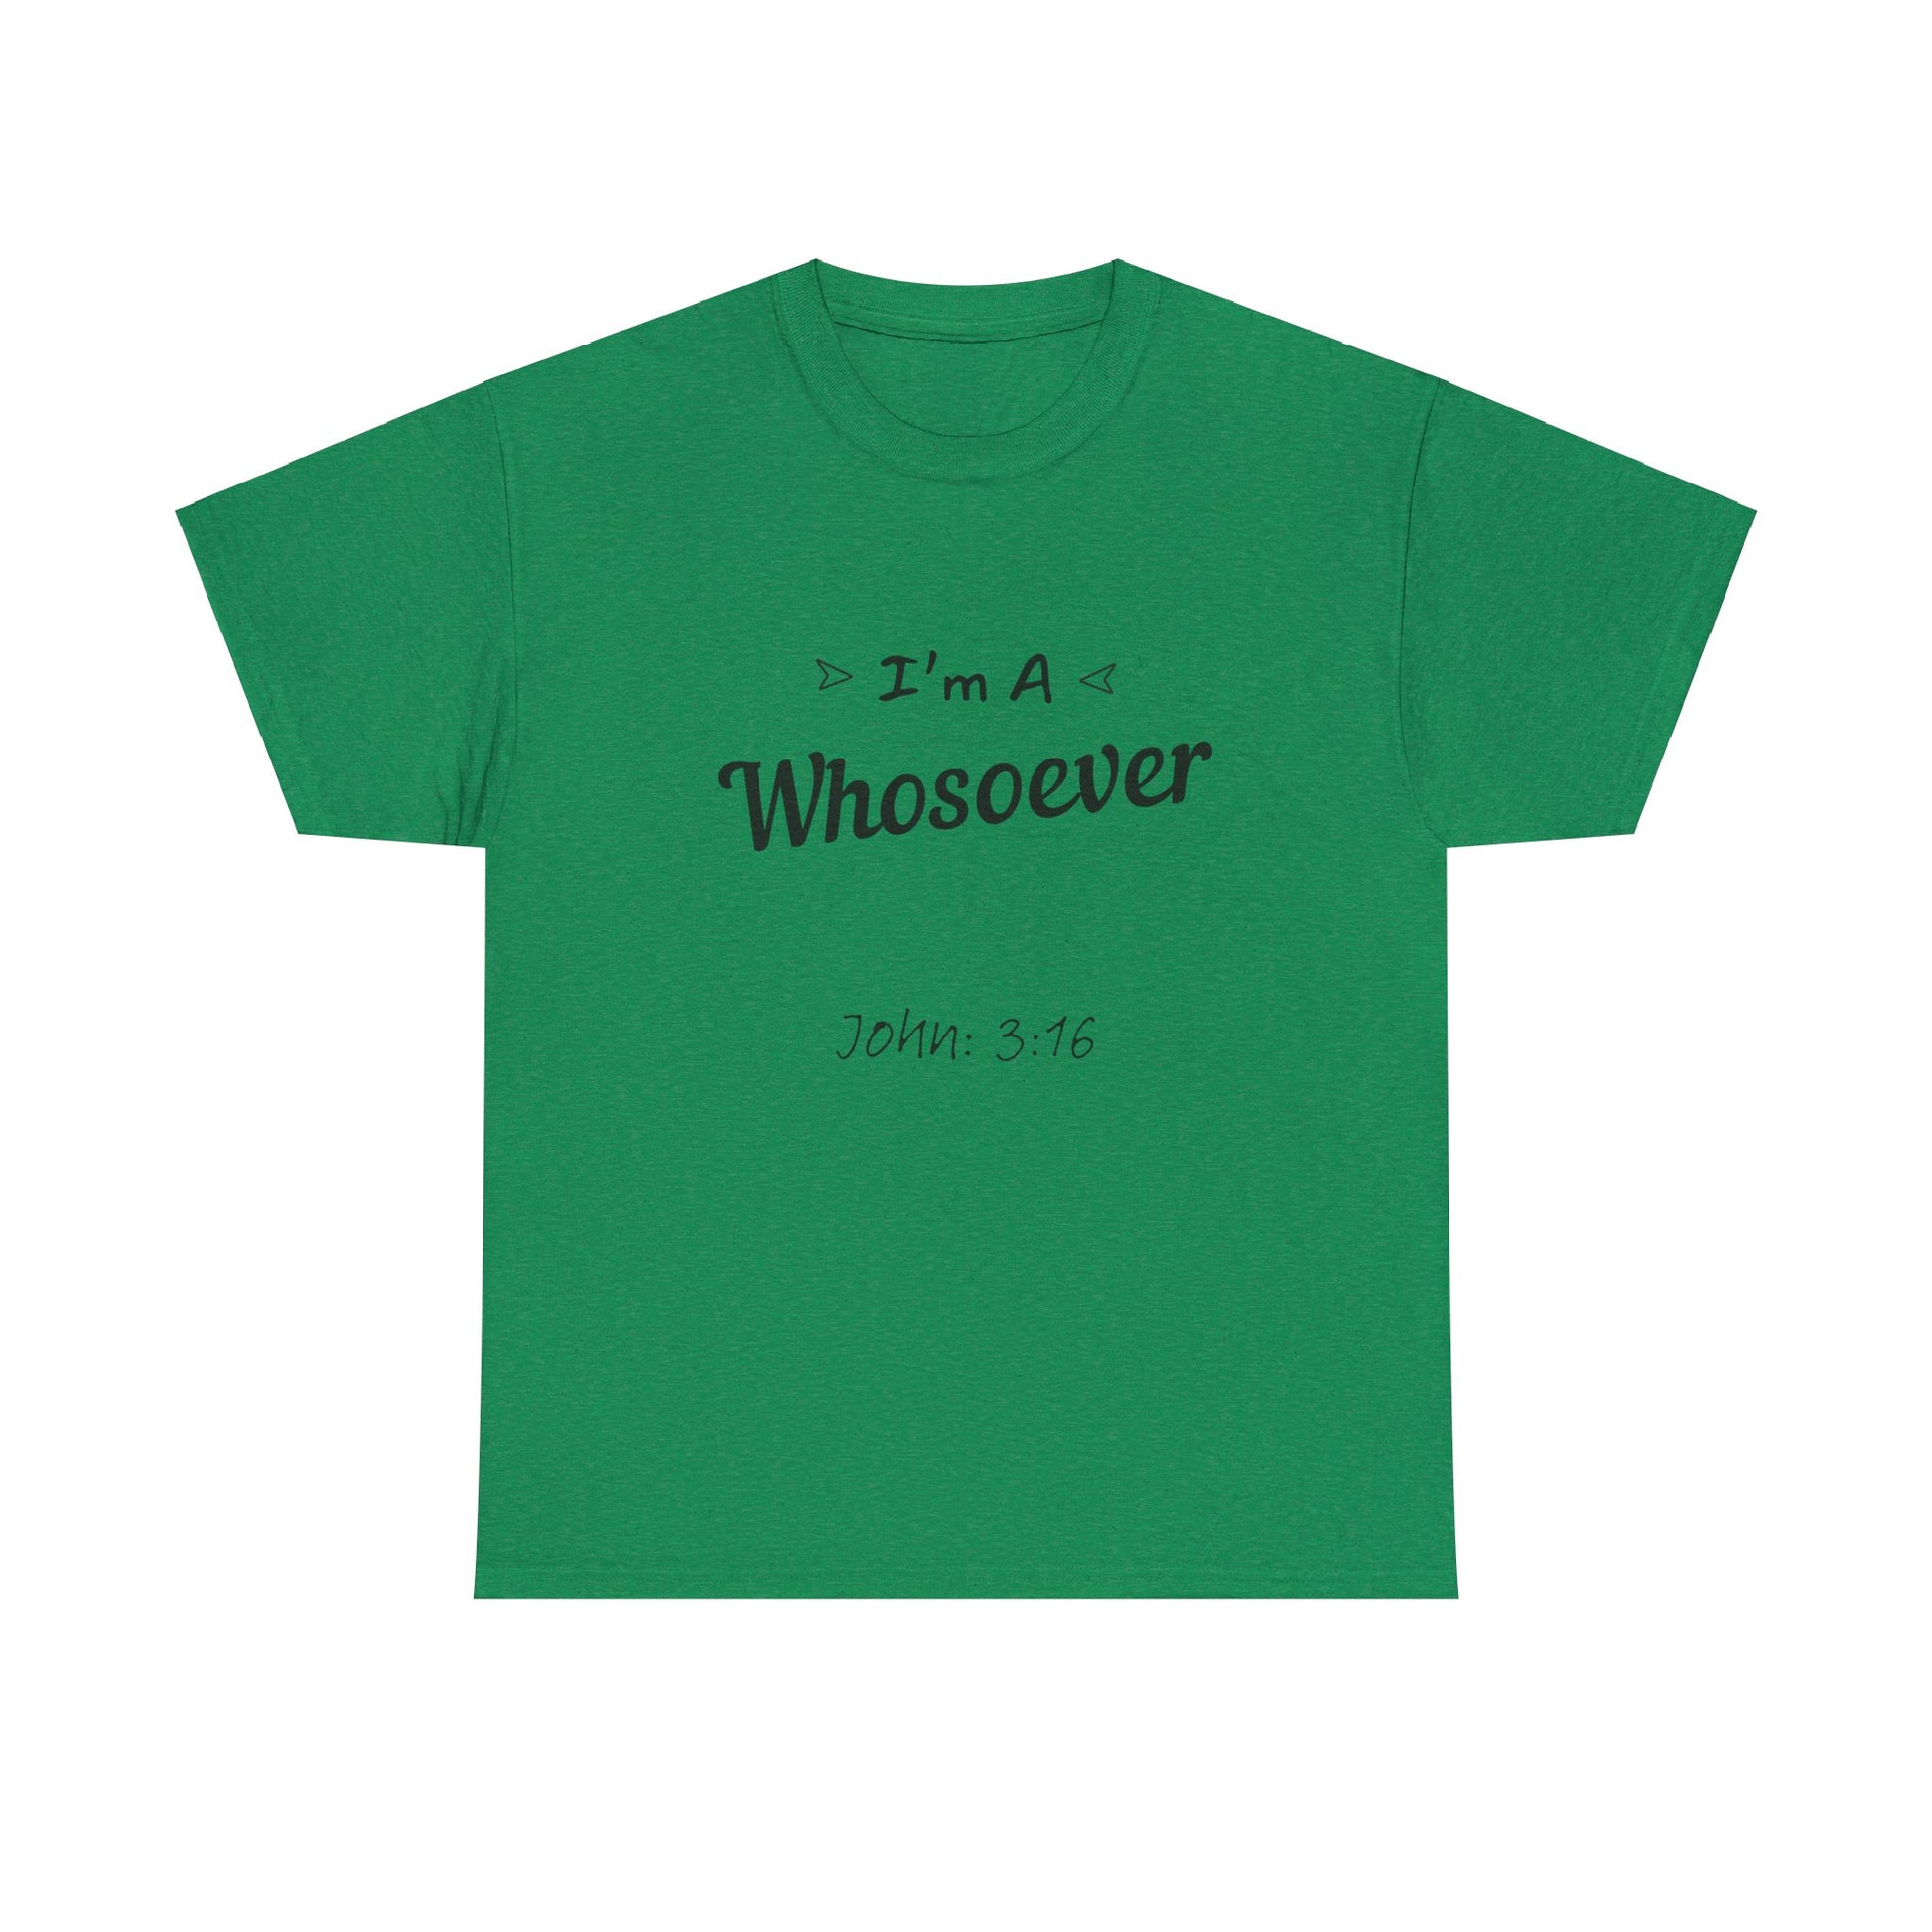 "Christian faith T-shirt with 'I'm a Whosoever' John 3:16 message."